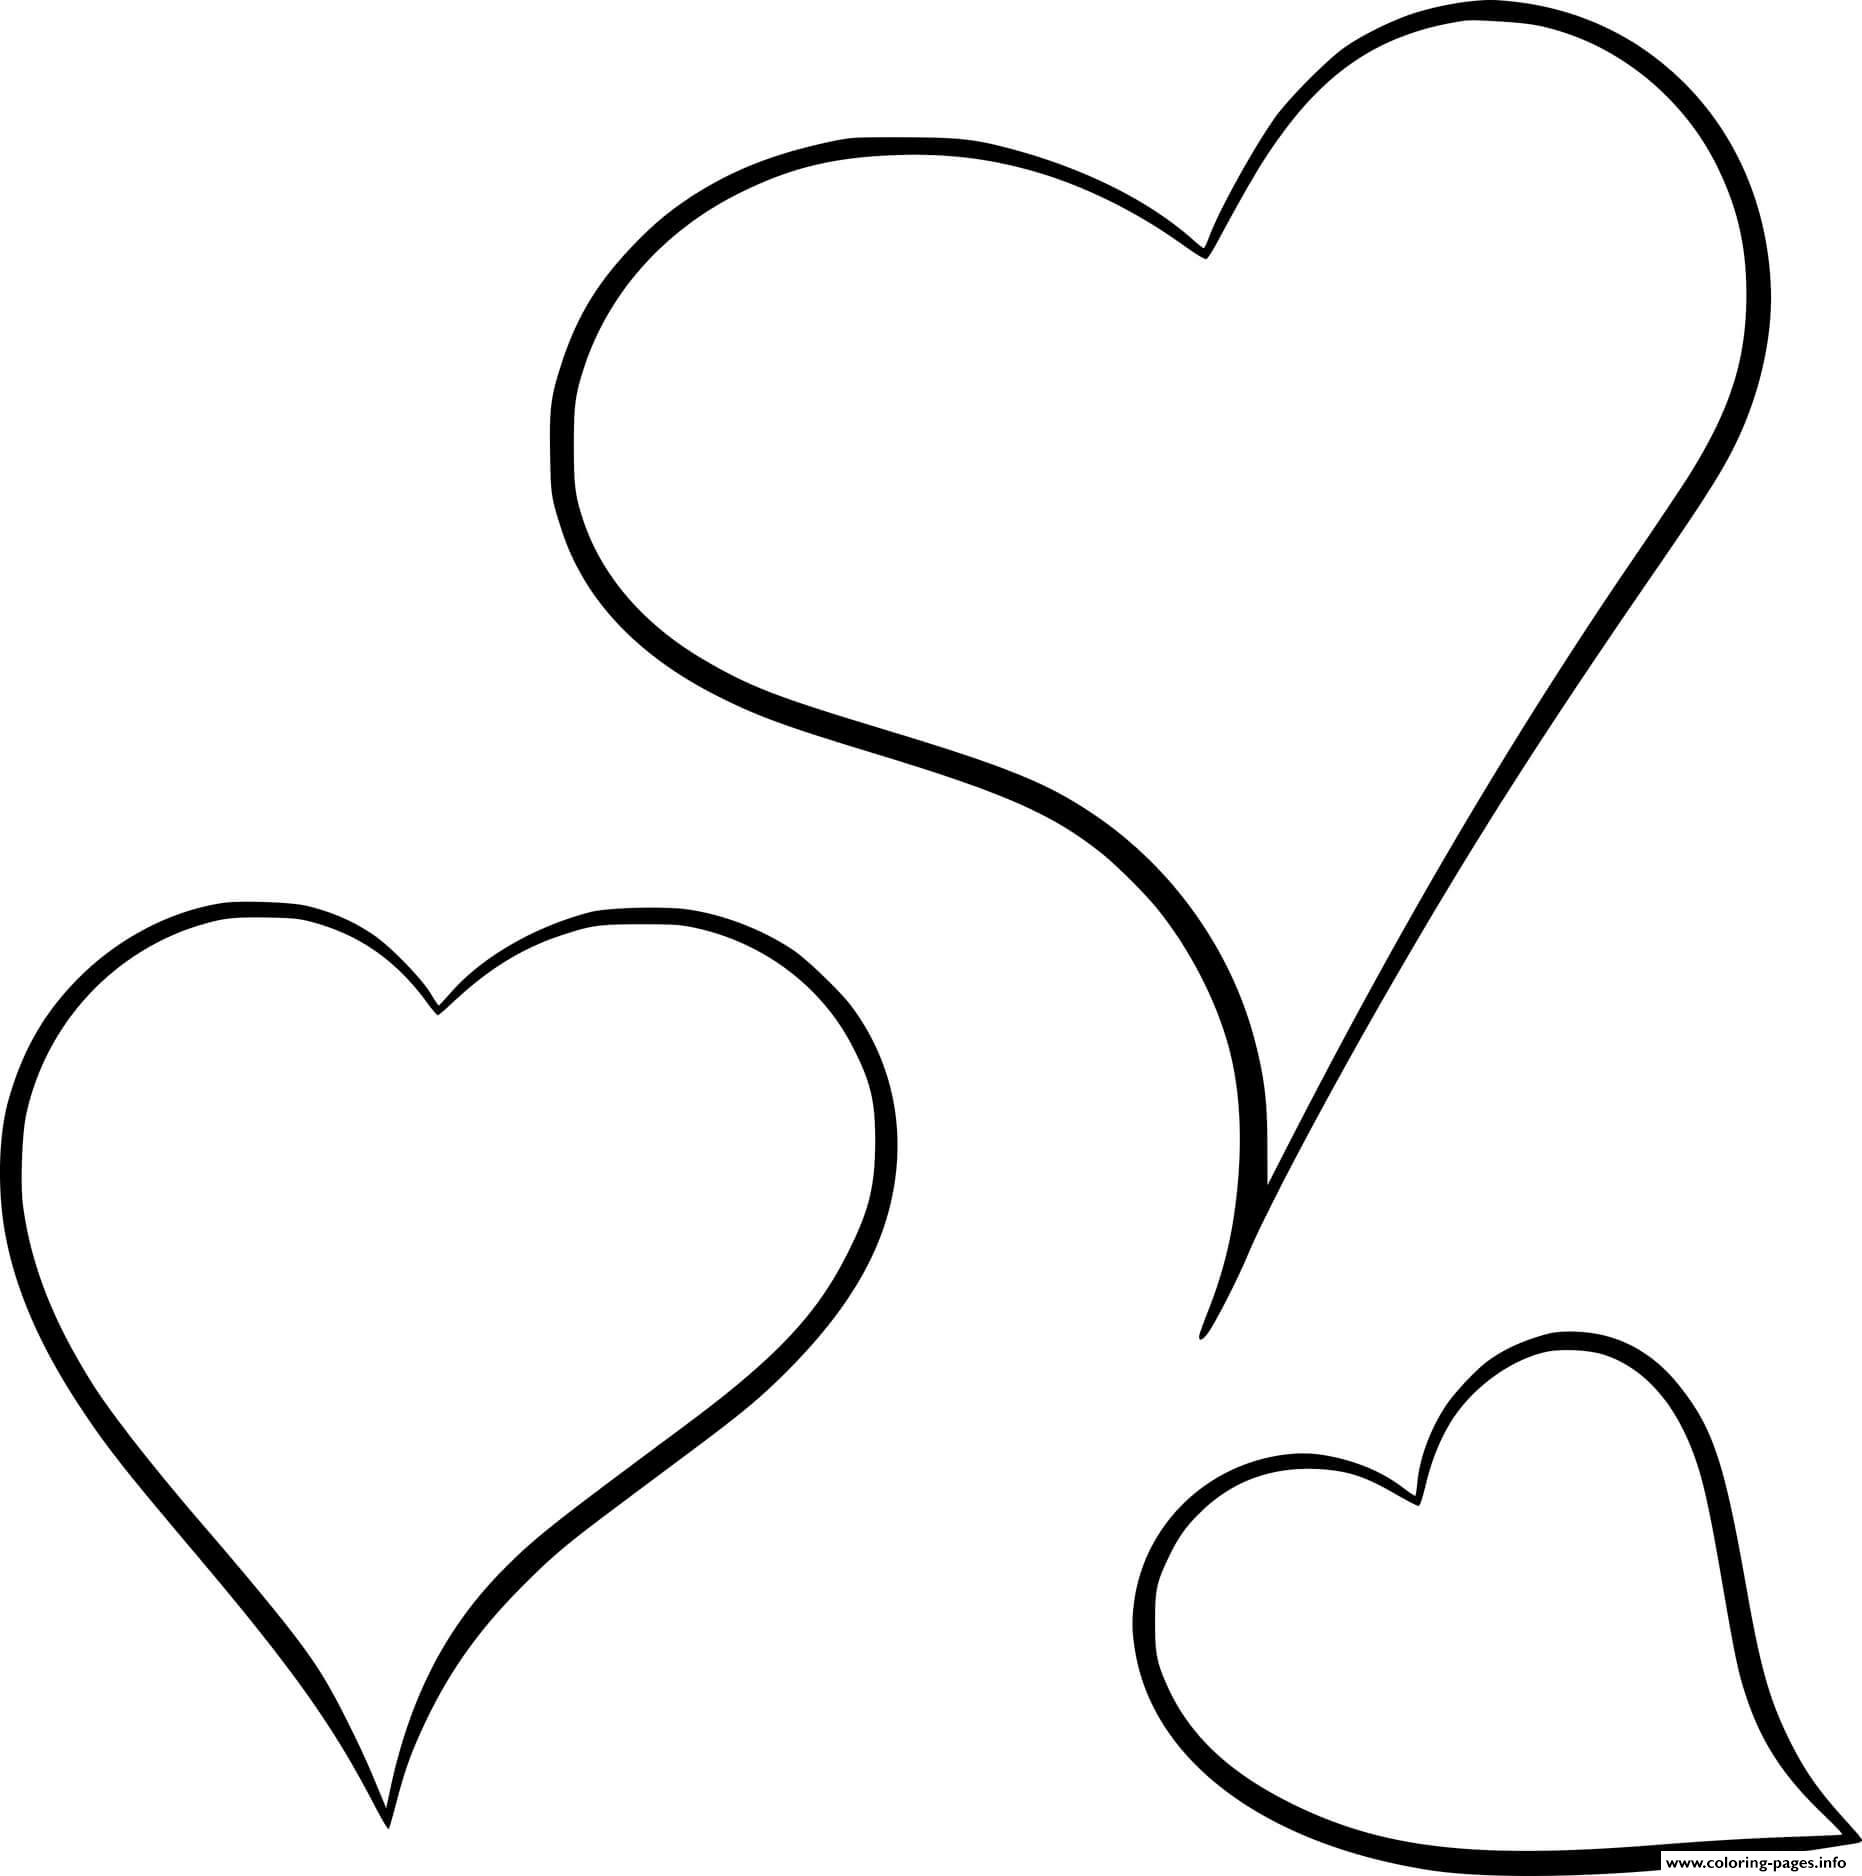 Three Simple Hearts coloring